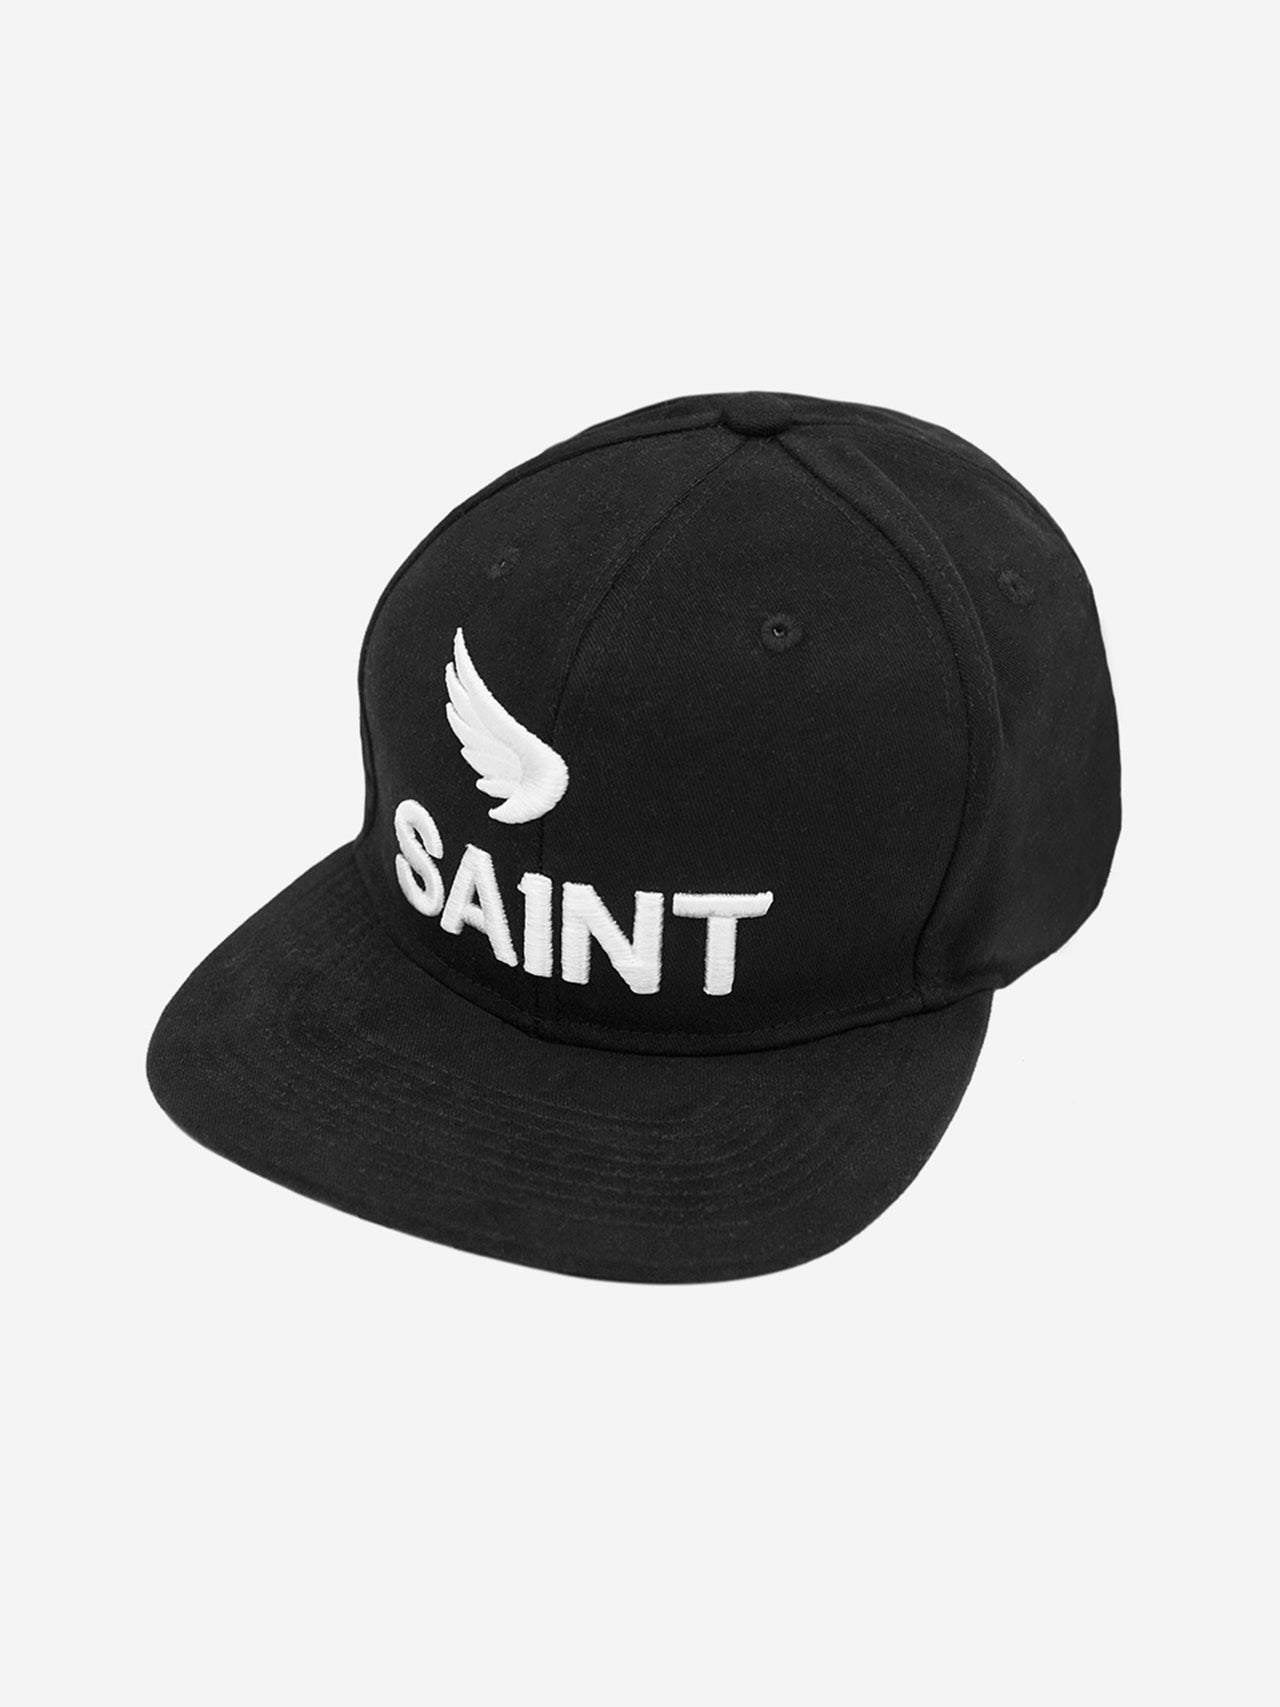 Saint 3D Logo Snapback - Saint USA